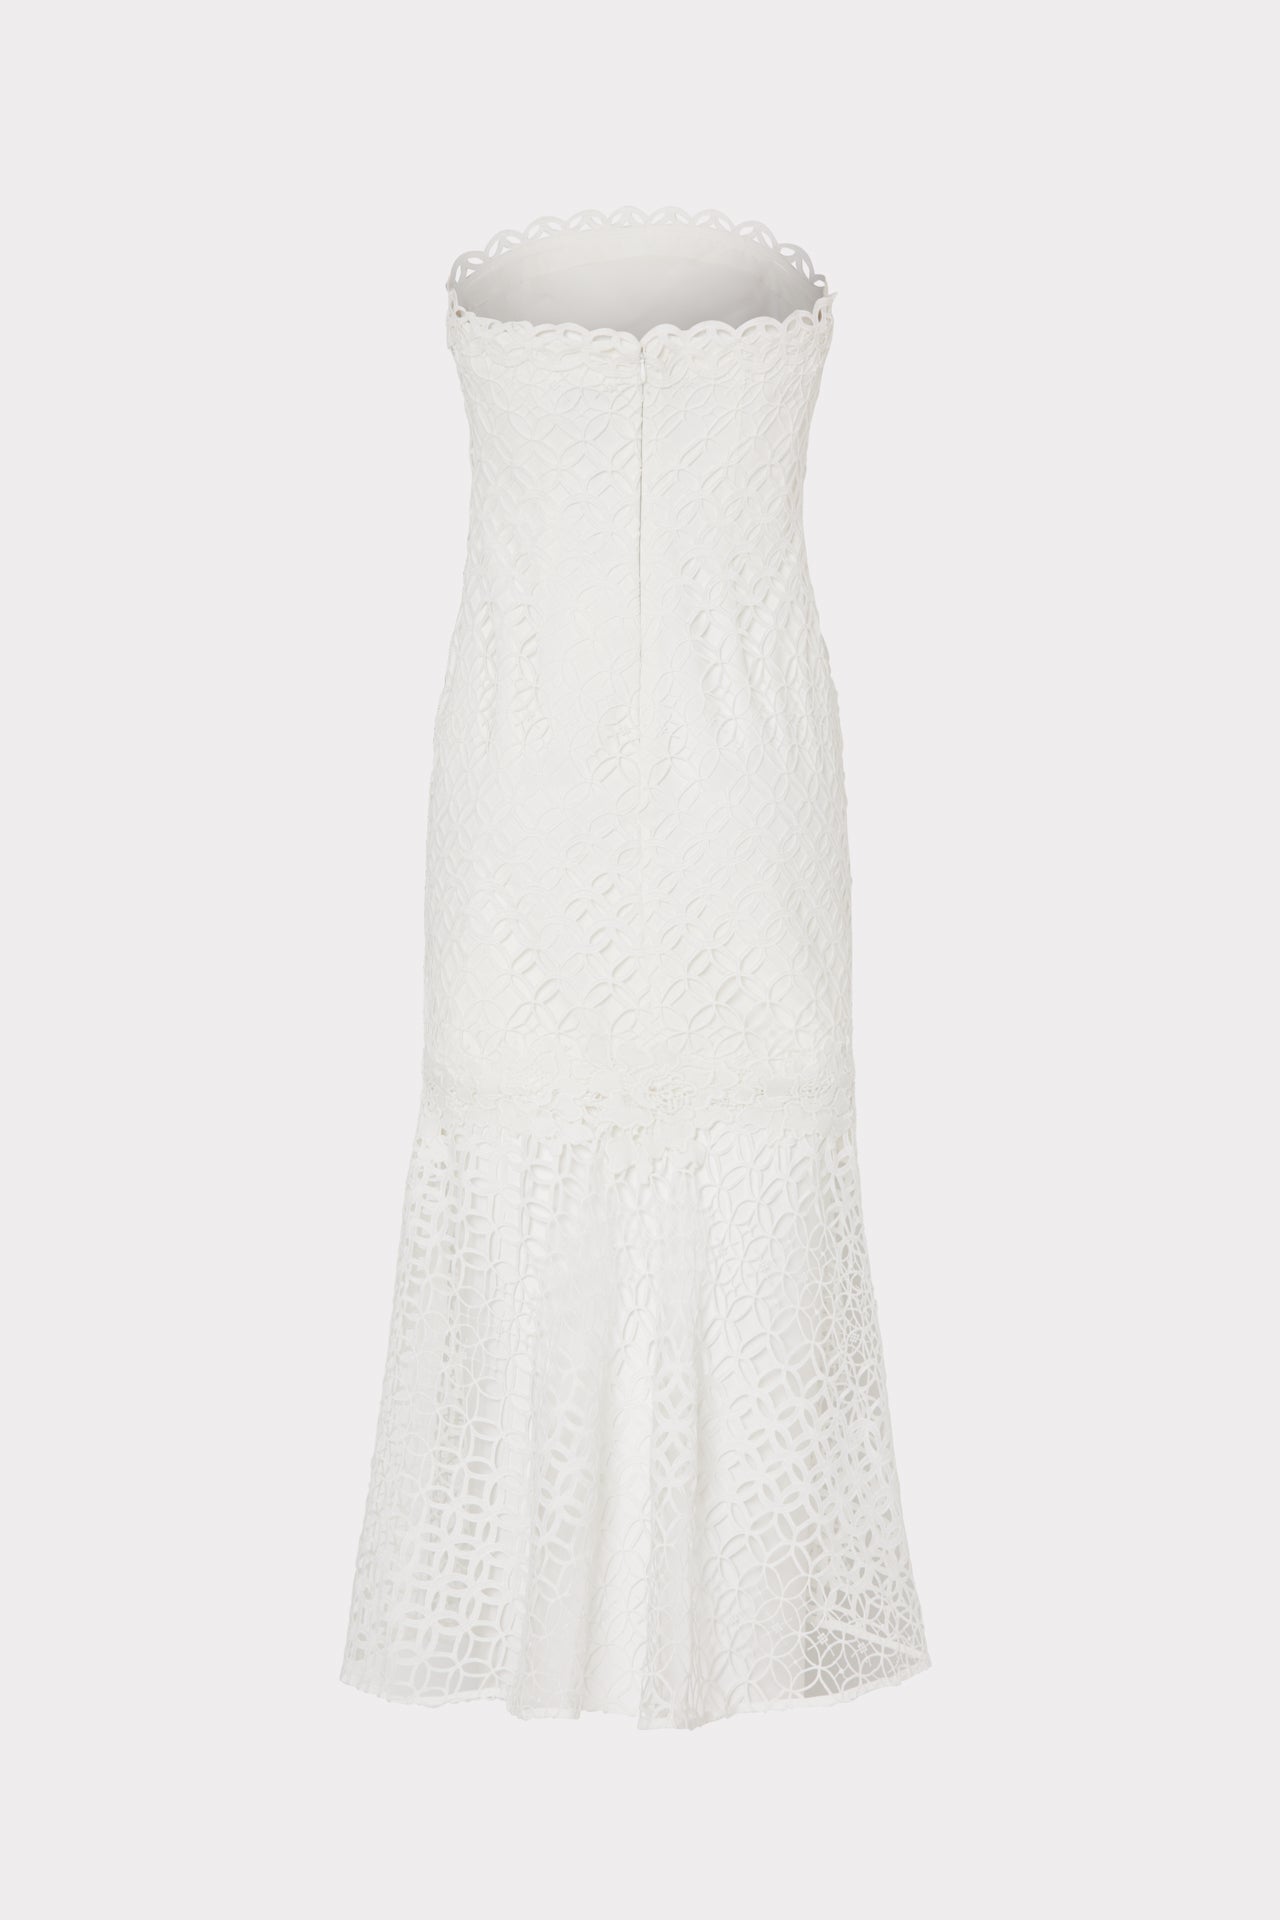 Nuriel Interlocking Geo Lace Dress in White | MILLY